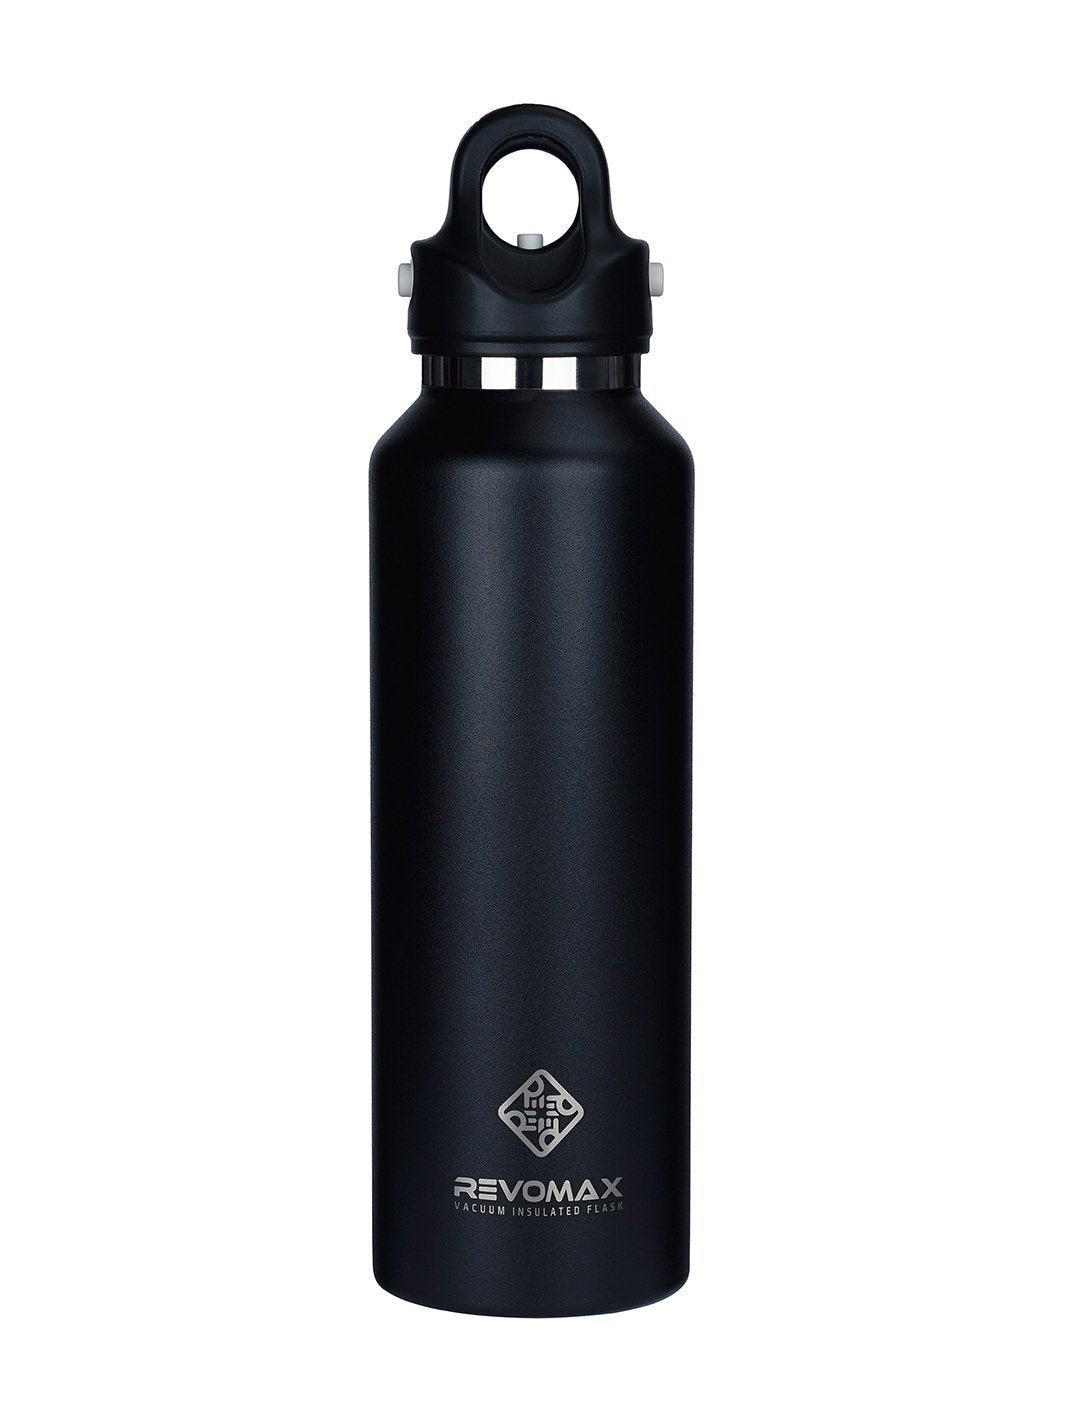 Revomax Vacuum Insulated Flask - 592ml / 20oz